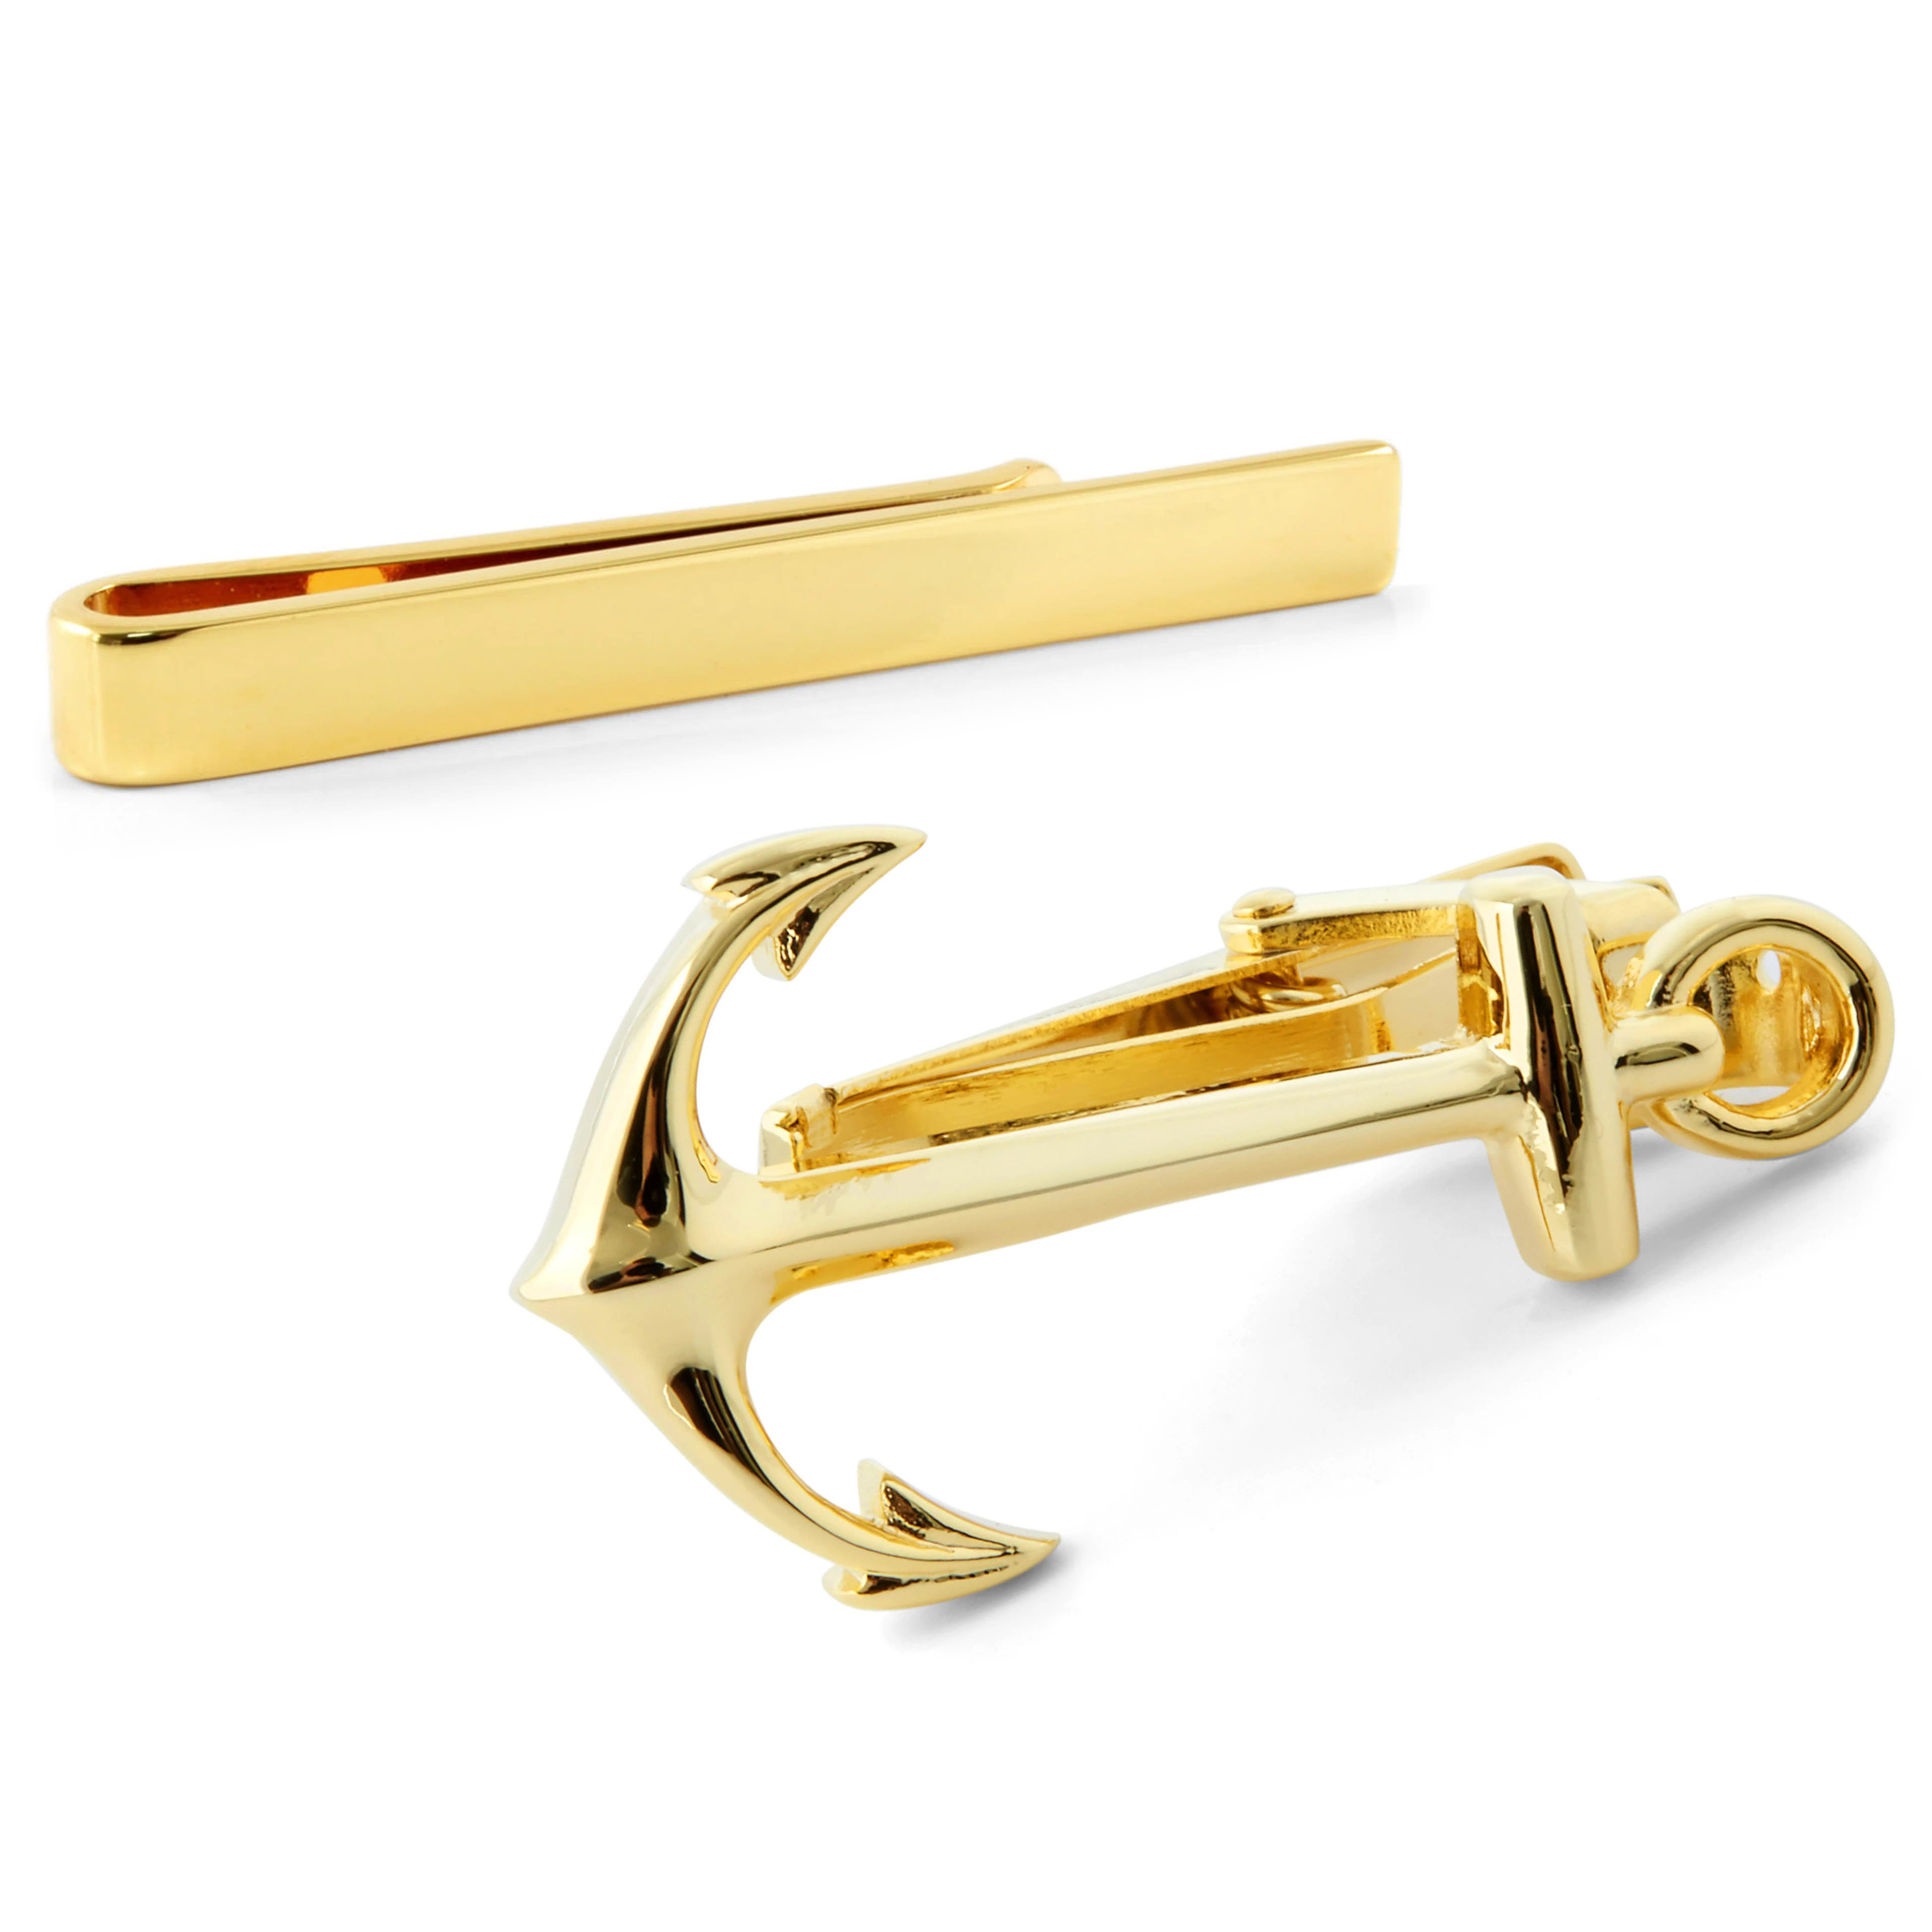 Gold-tone Anchor Tie Bar and Clip Set